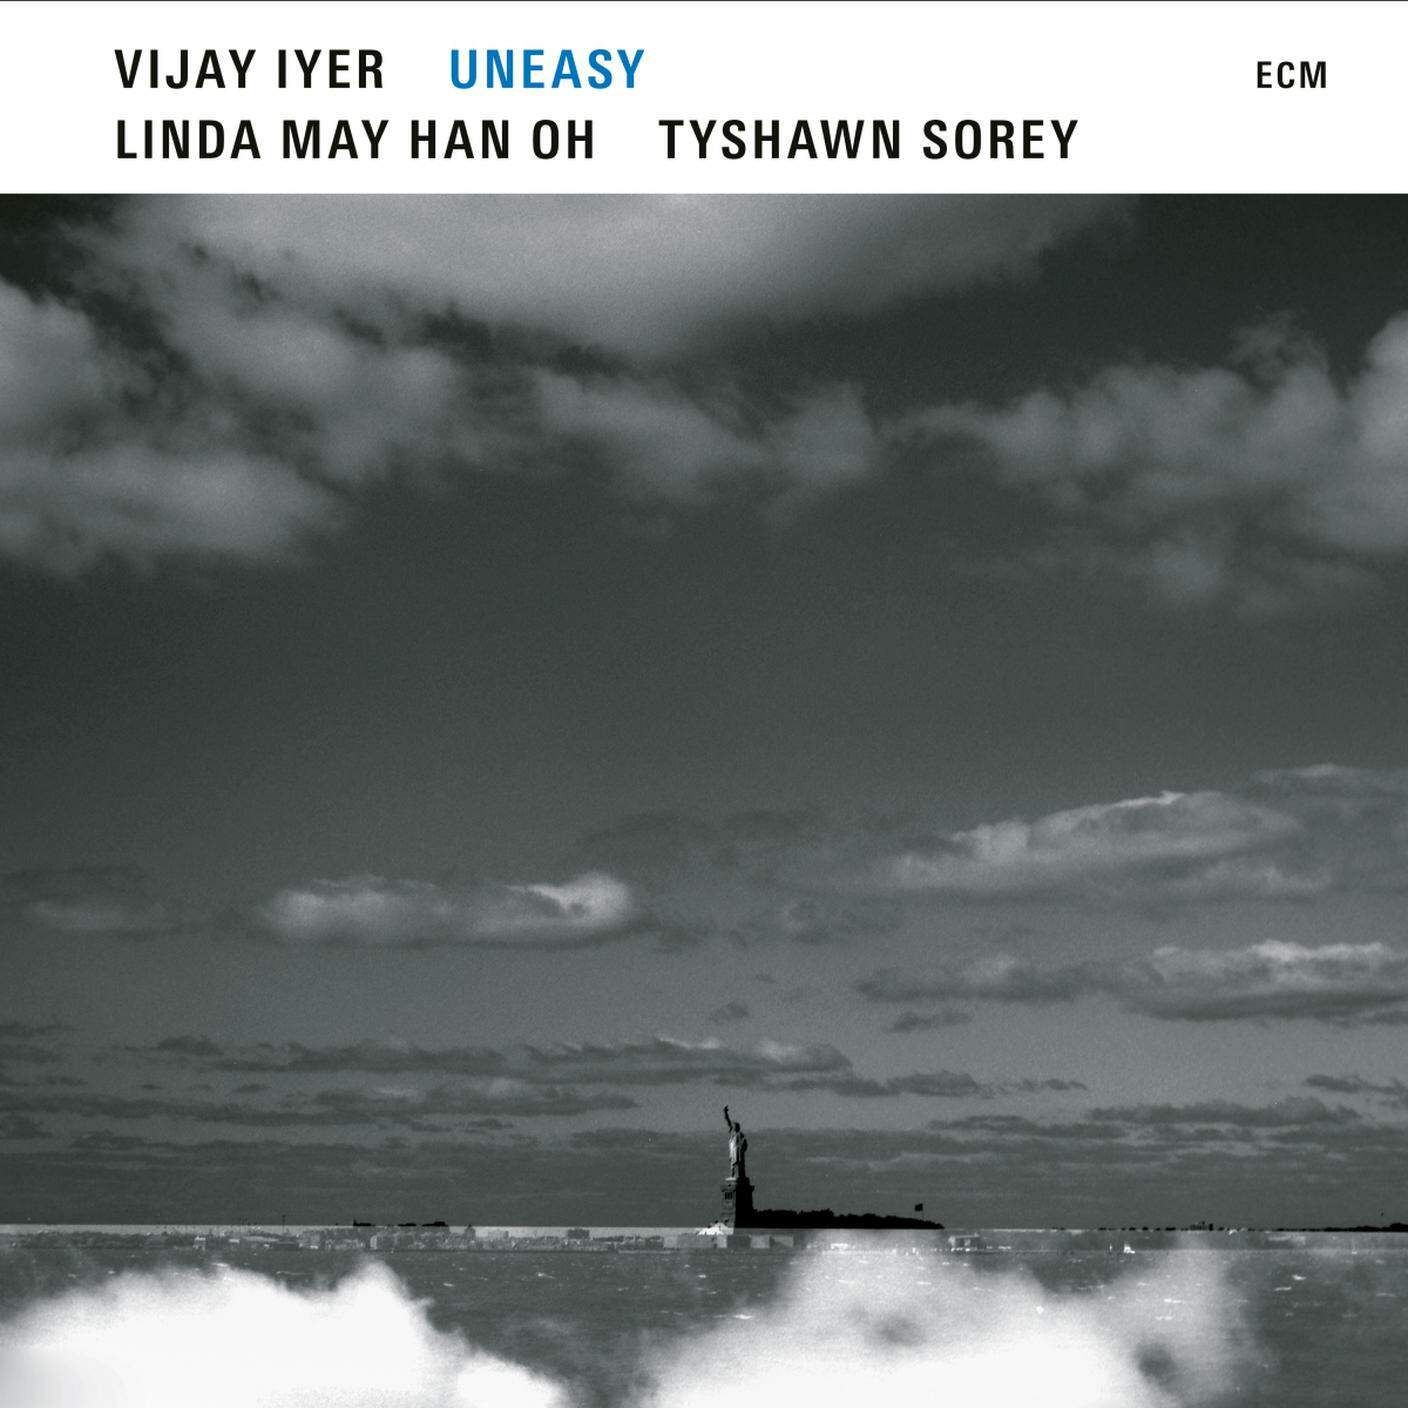 Iyer-May, Oh-Sorey, Tyshawn Sorey: "Uneasy", ECM (dettaglio copertina)